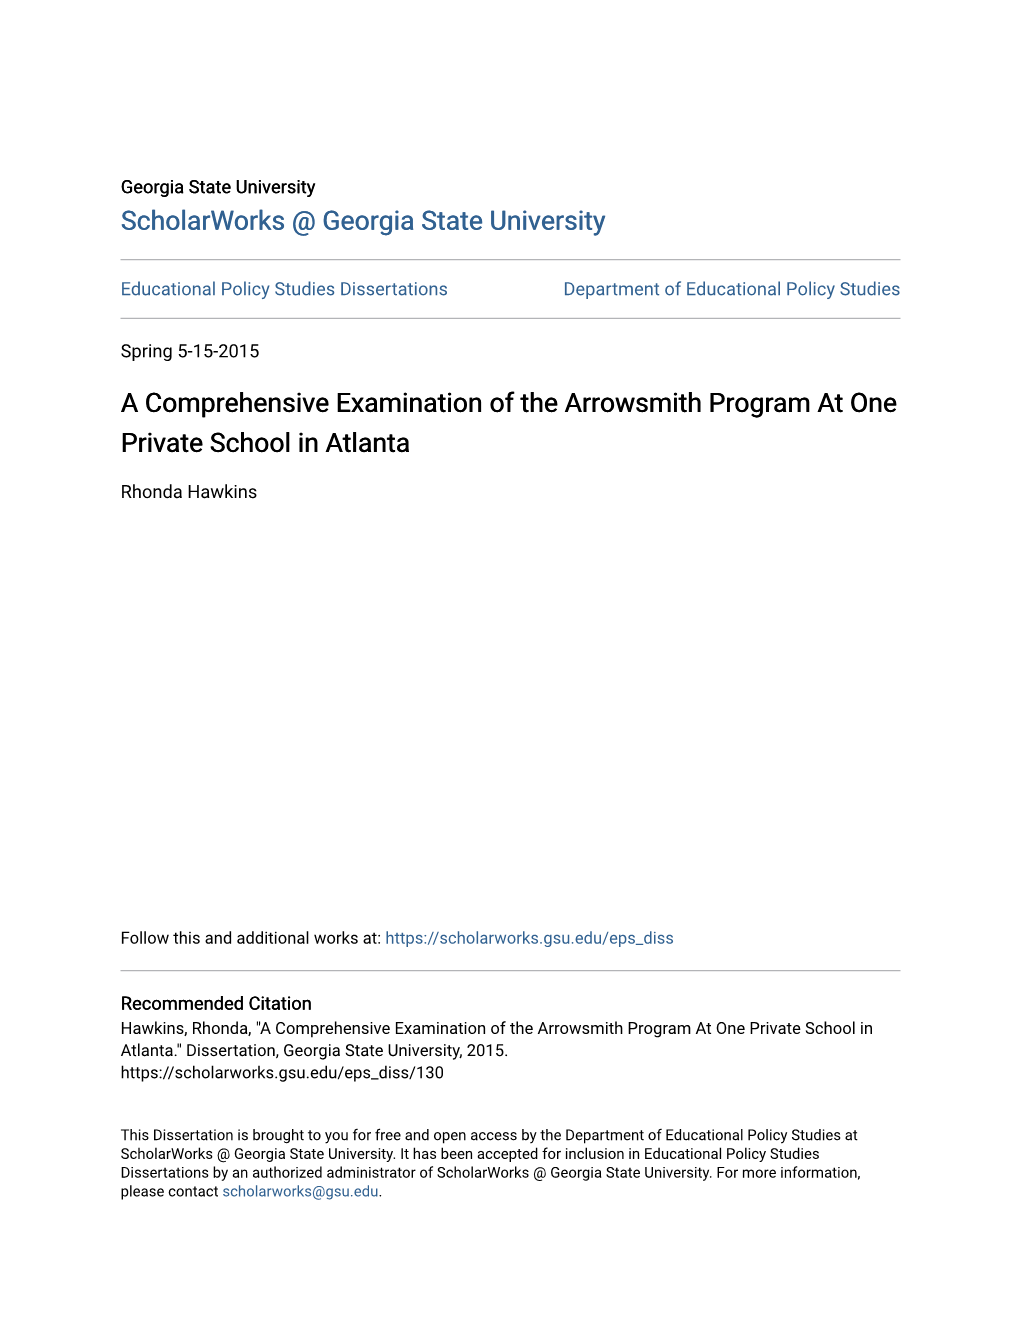 A Comprehensive Examination of the Arrowsmith Program at One Private School in Atlanta